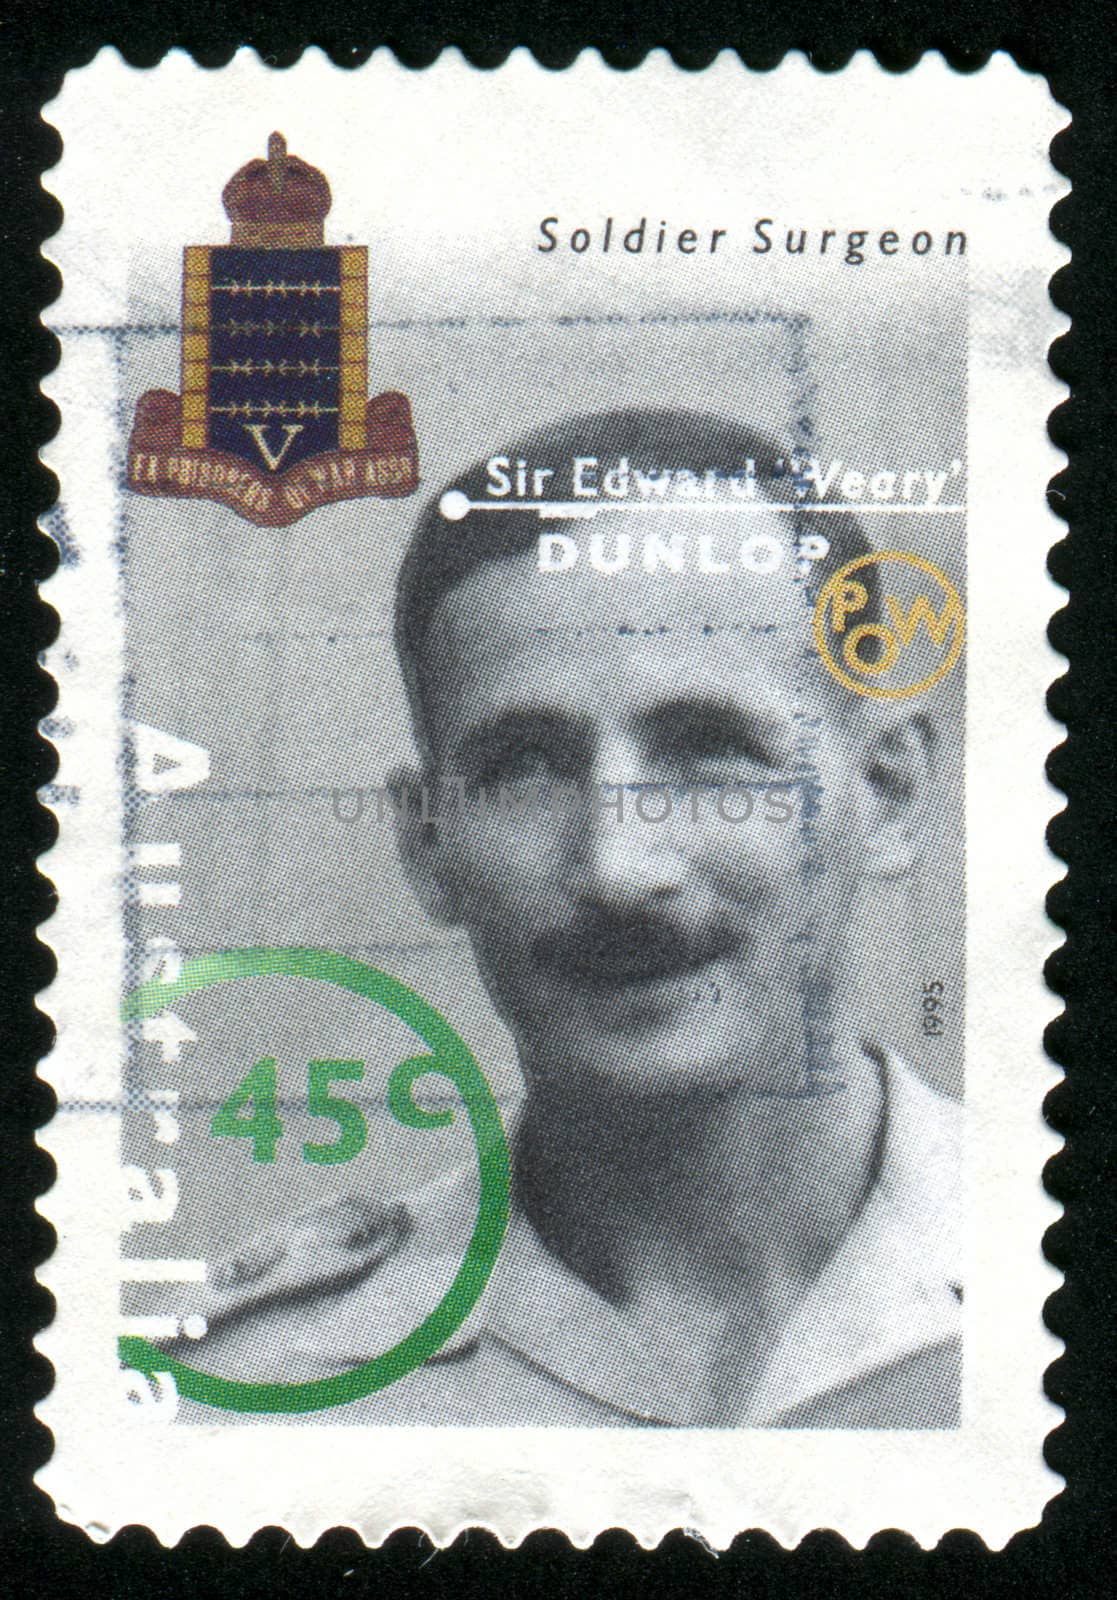 AUSTRALIA - CIRCA 1995: stamp printed by Australia, shows Sir Edward Dunlop, circa 1995